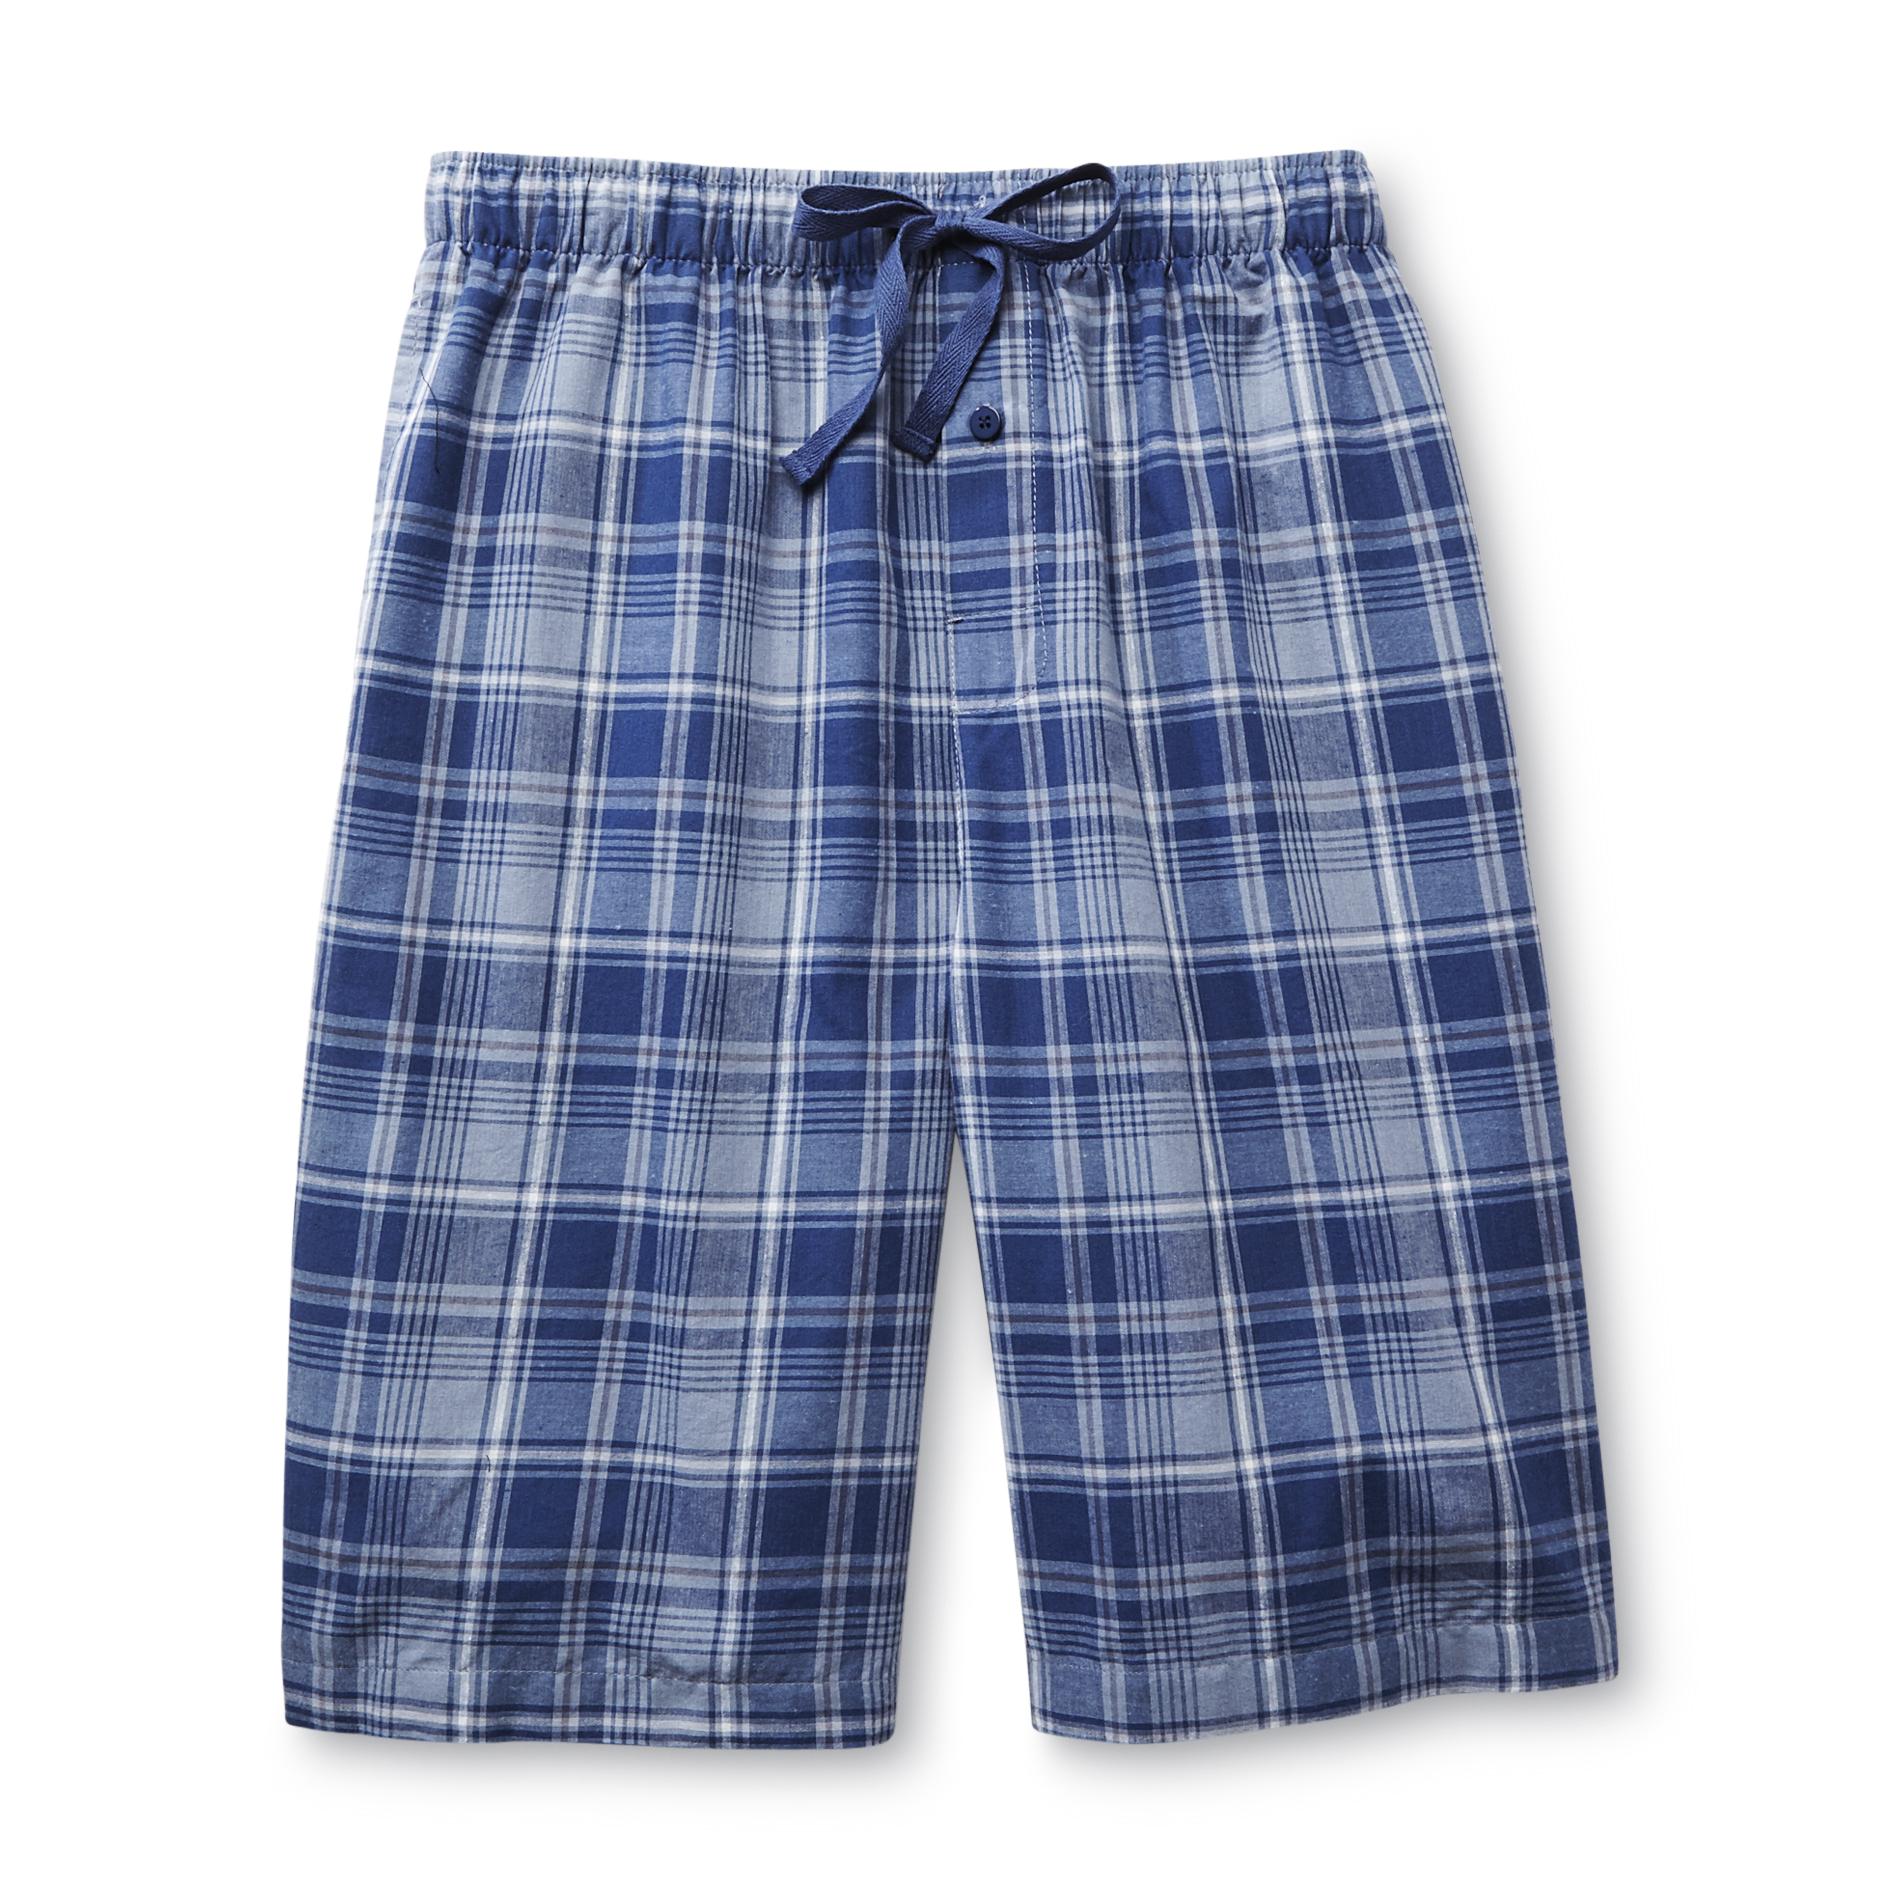 Basic Editions Men's Big & Tall Pajama Shorts - Plaid